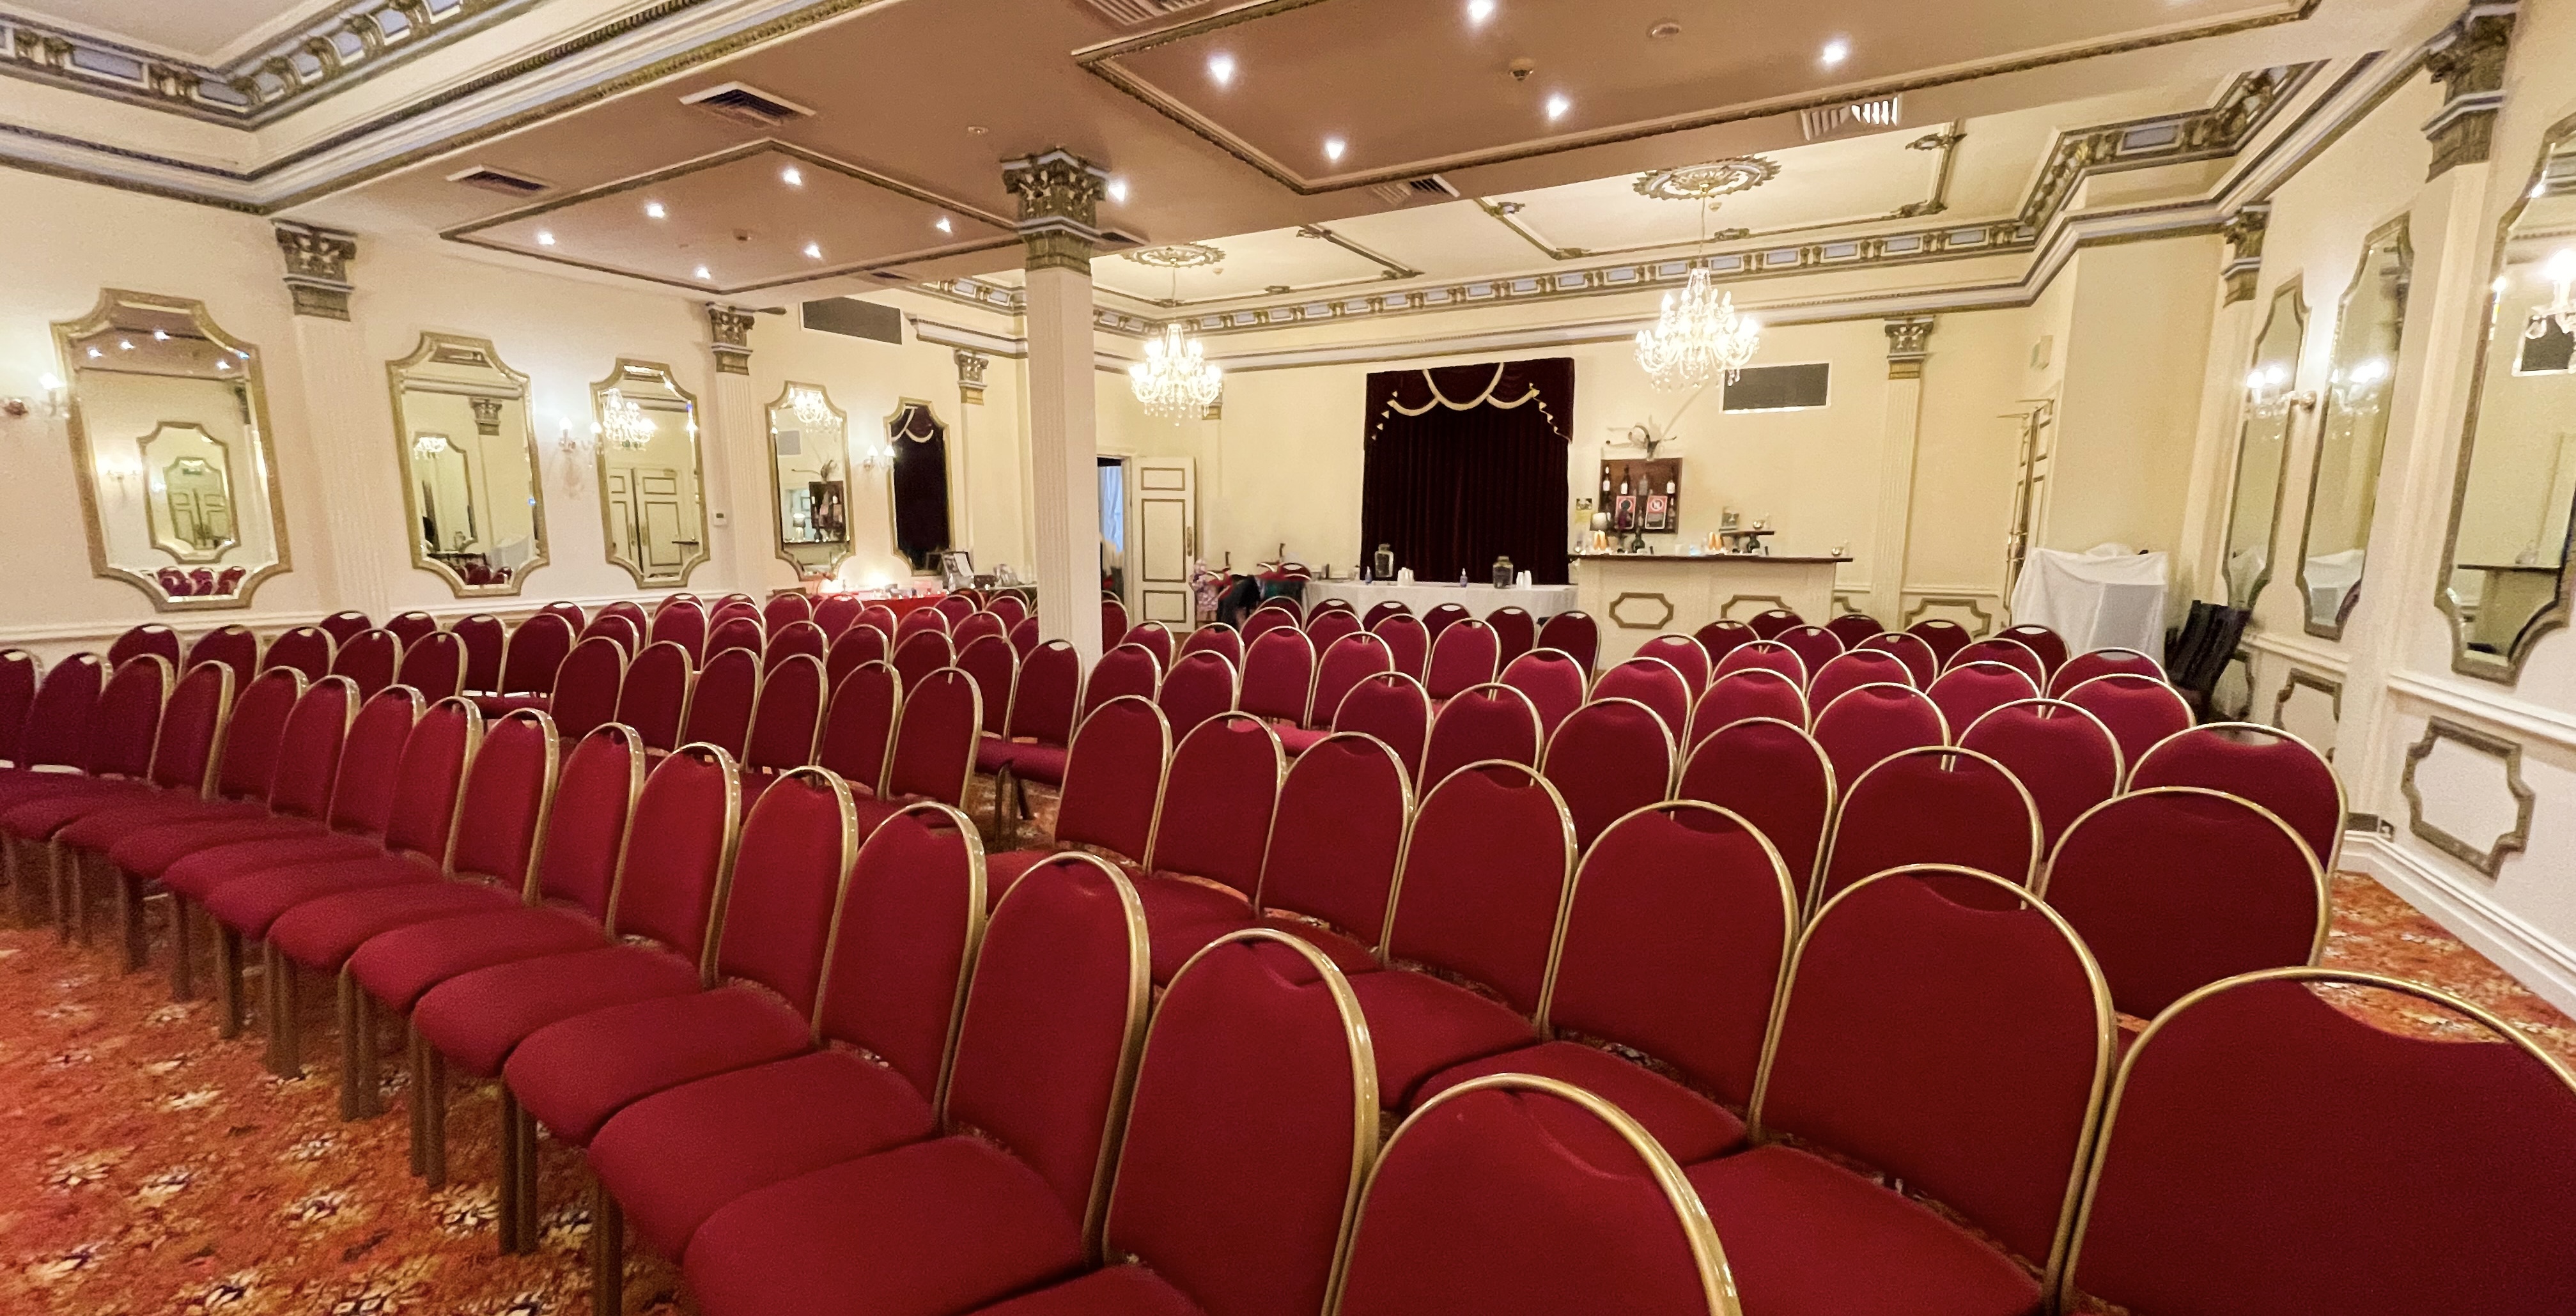 EVENTS - Palais Royale Ballroom